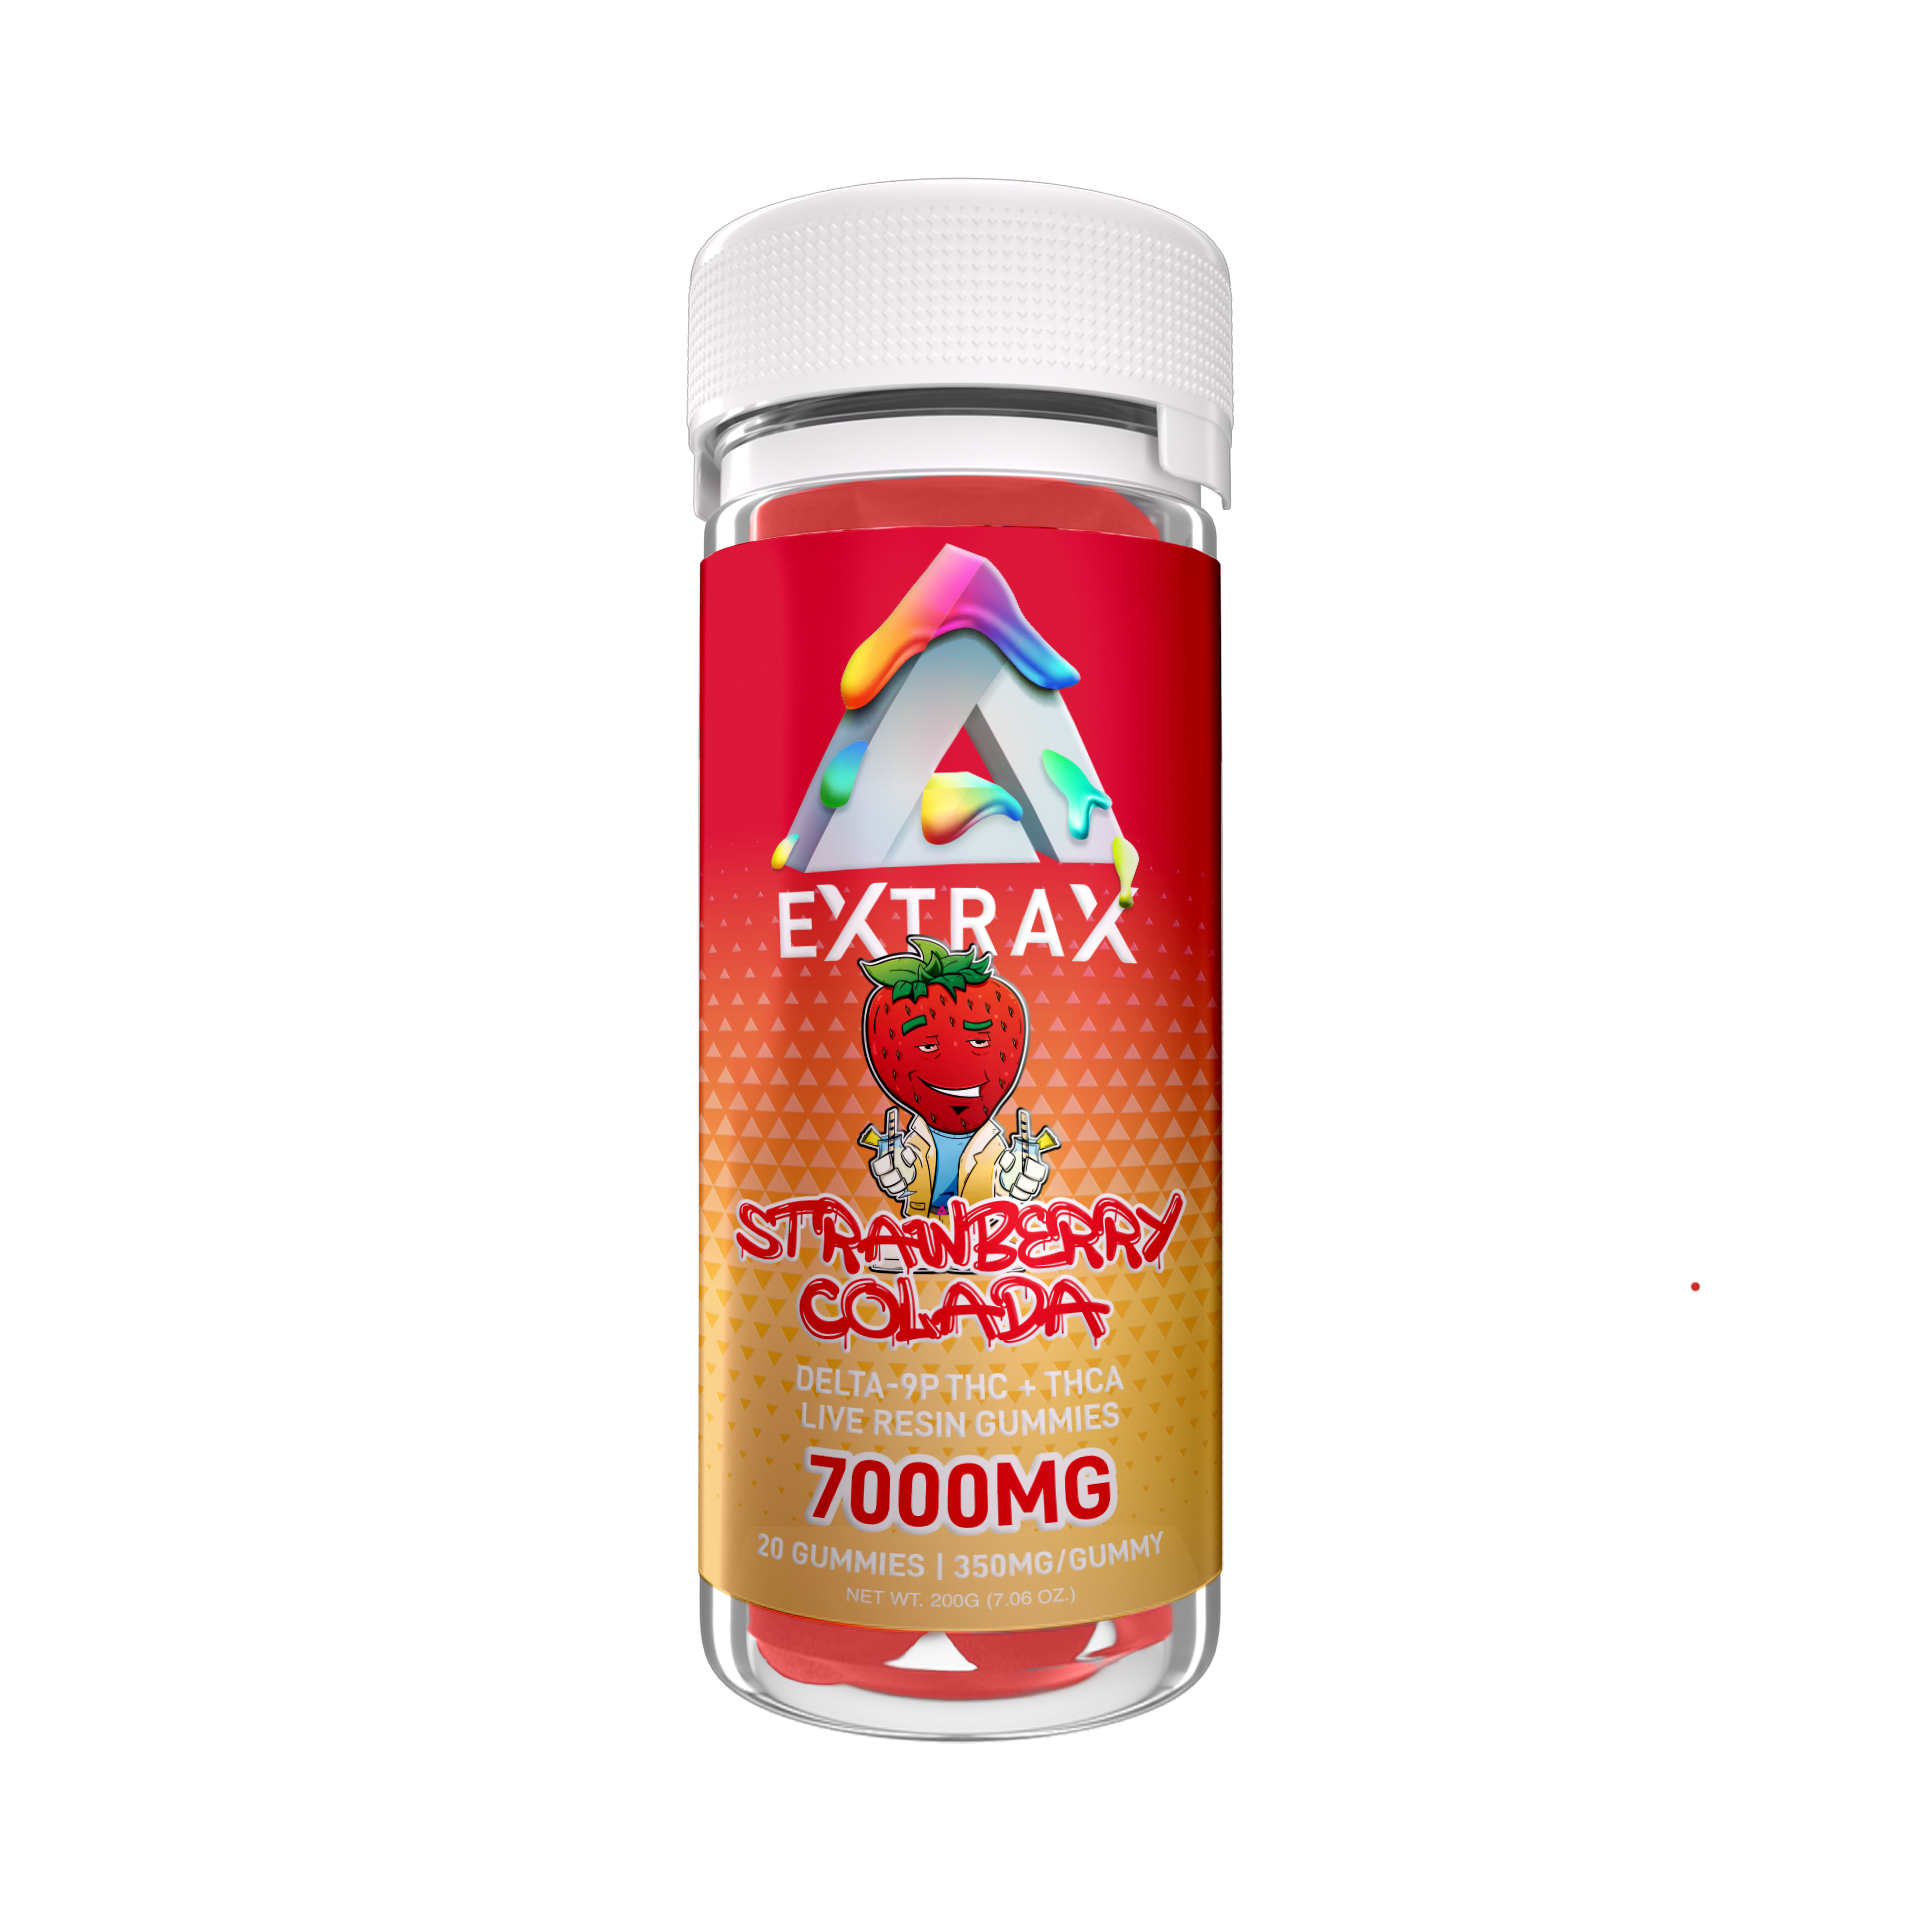 Delta Extrax Strawberry Colada | Gummies THCa 7000mg | Adios Blend Best Price